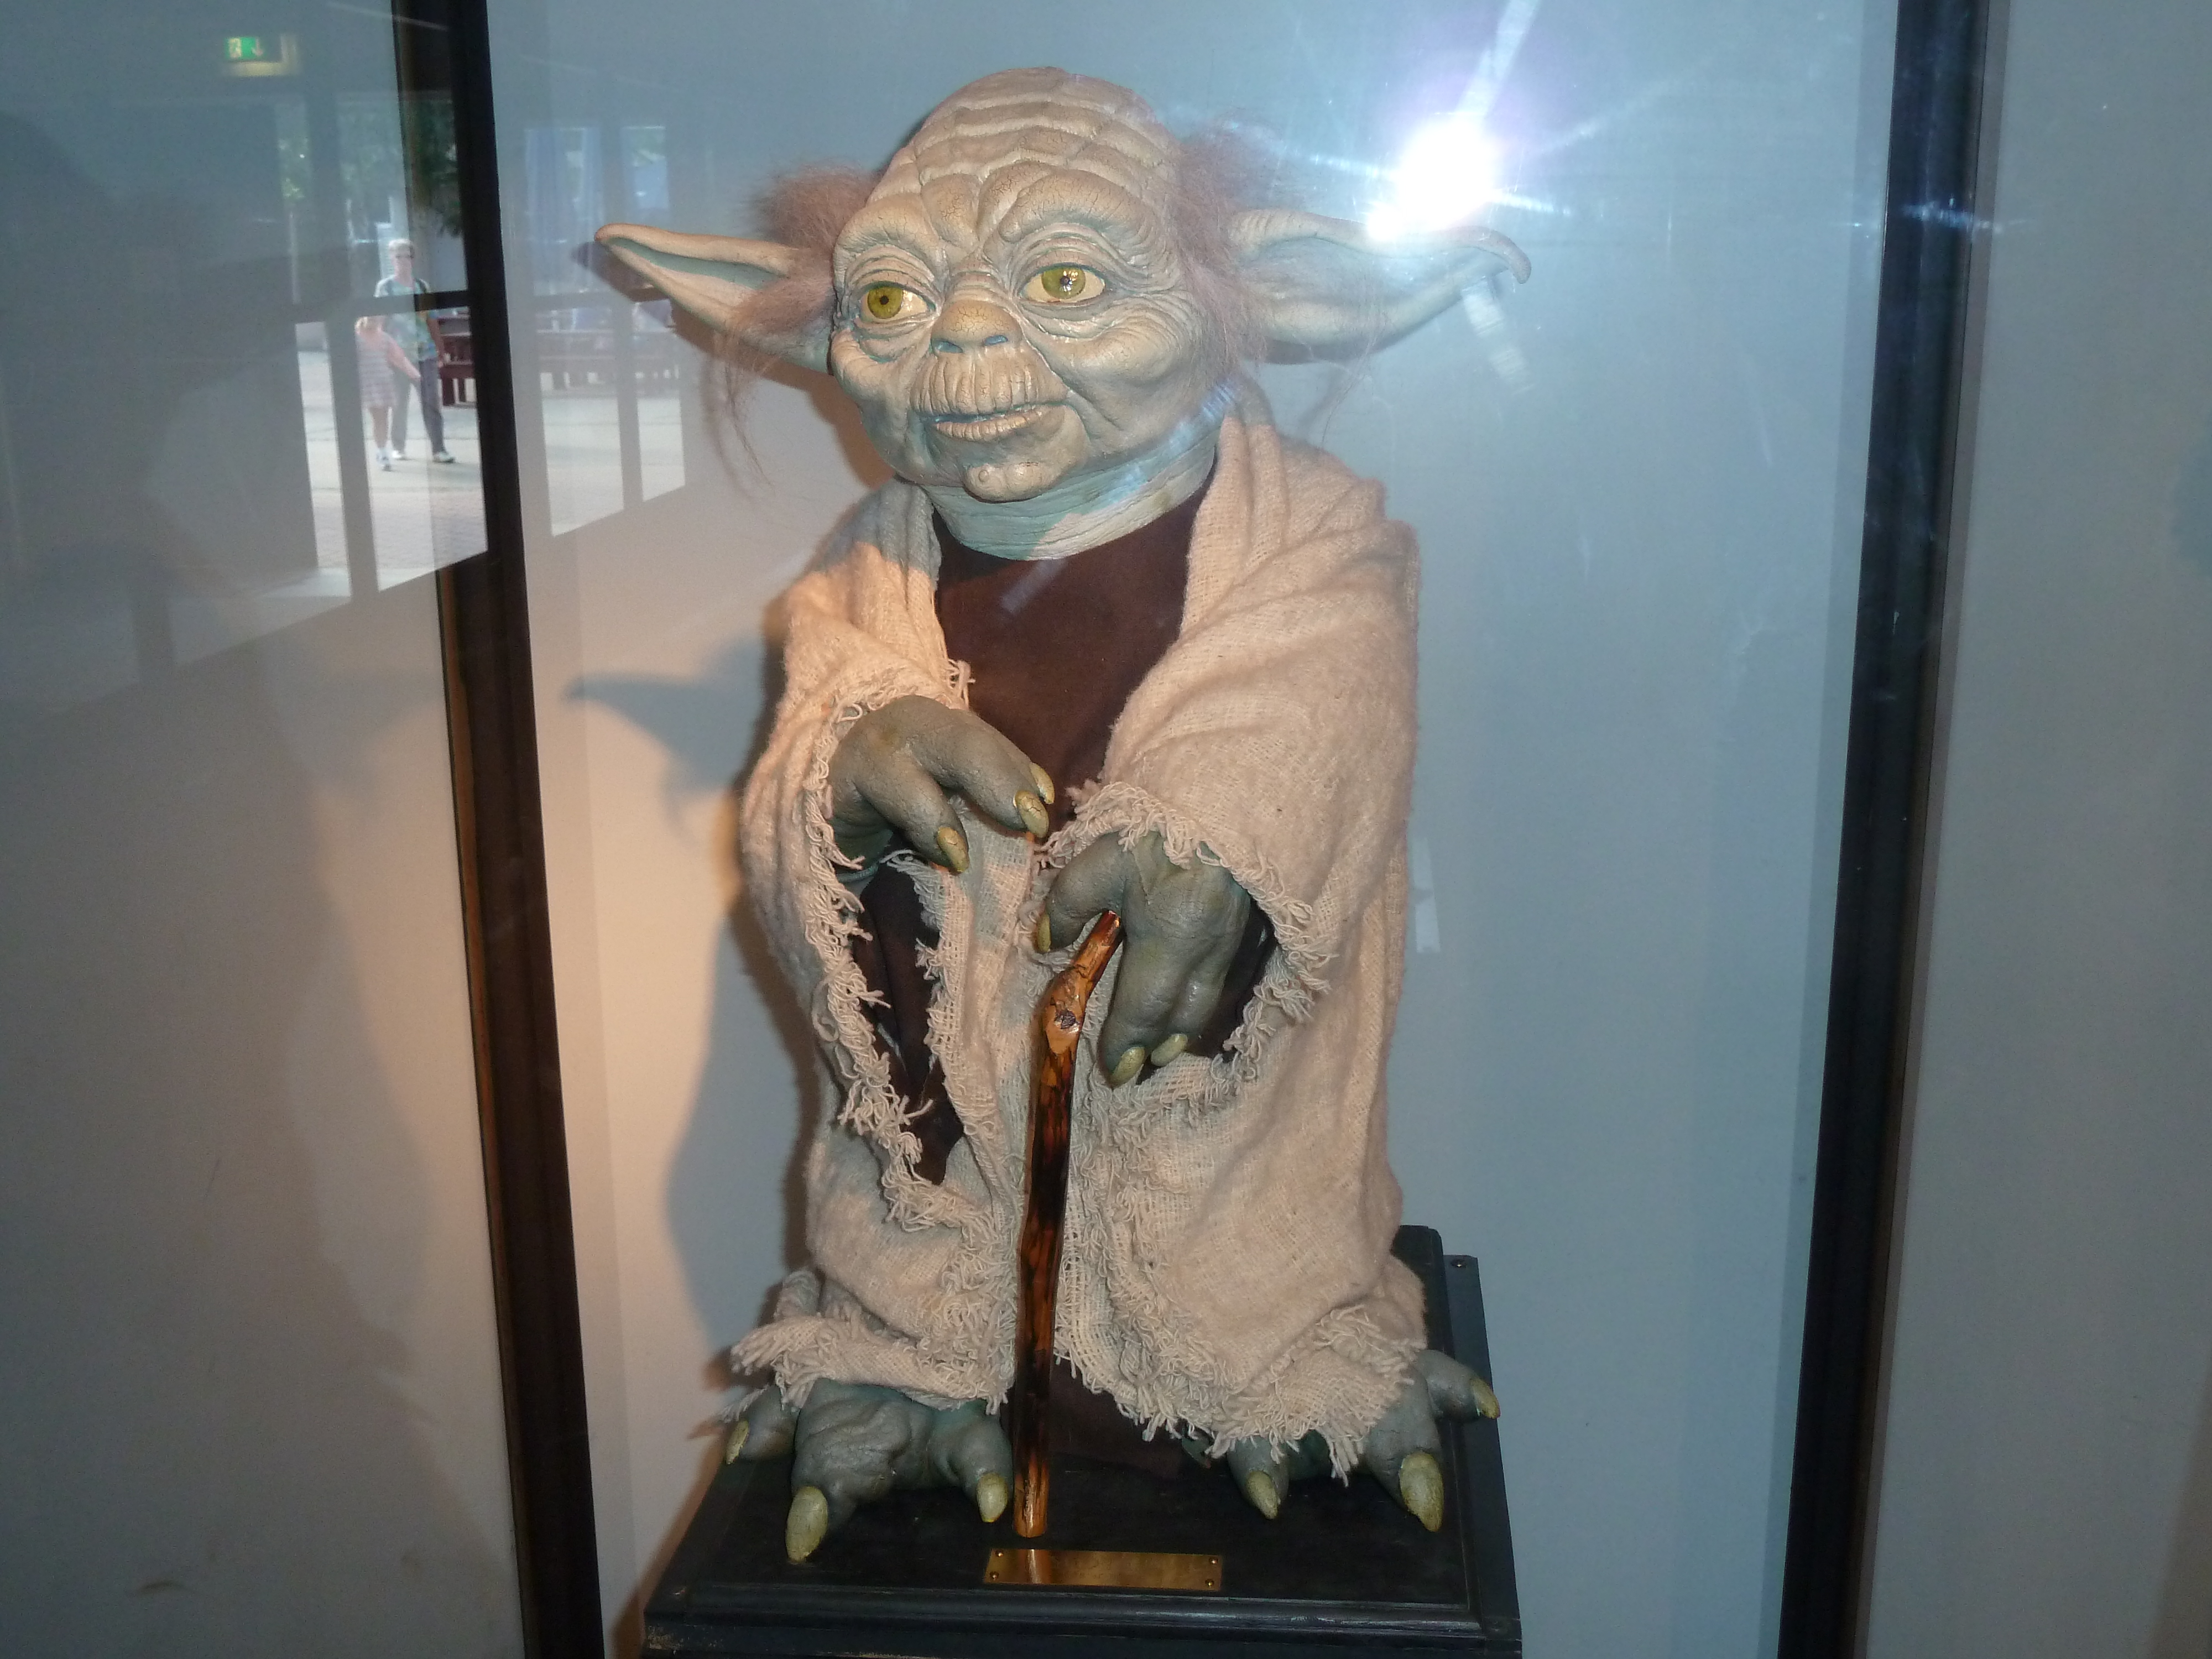 Filmpark Babelsberg
Yoda lässt grüßen.